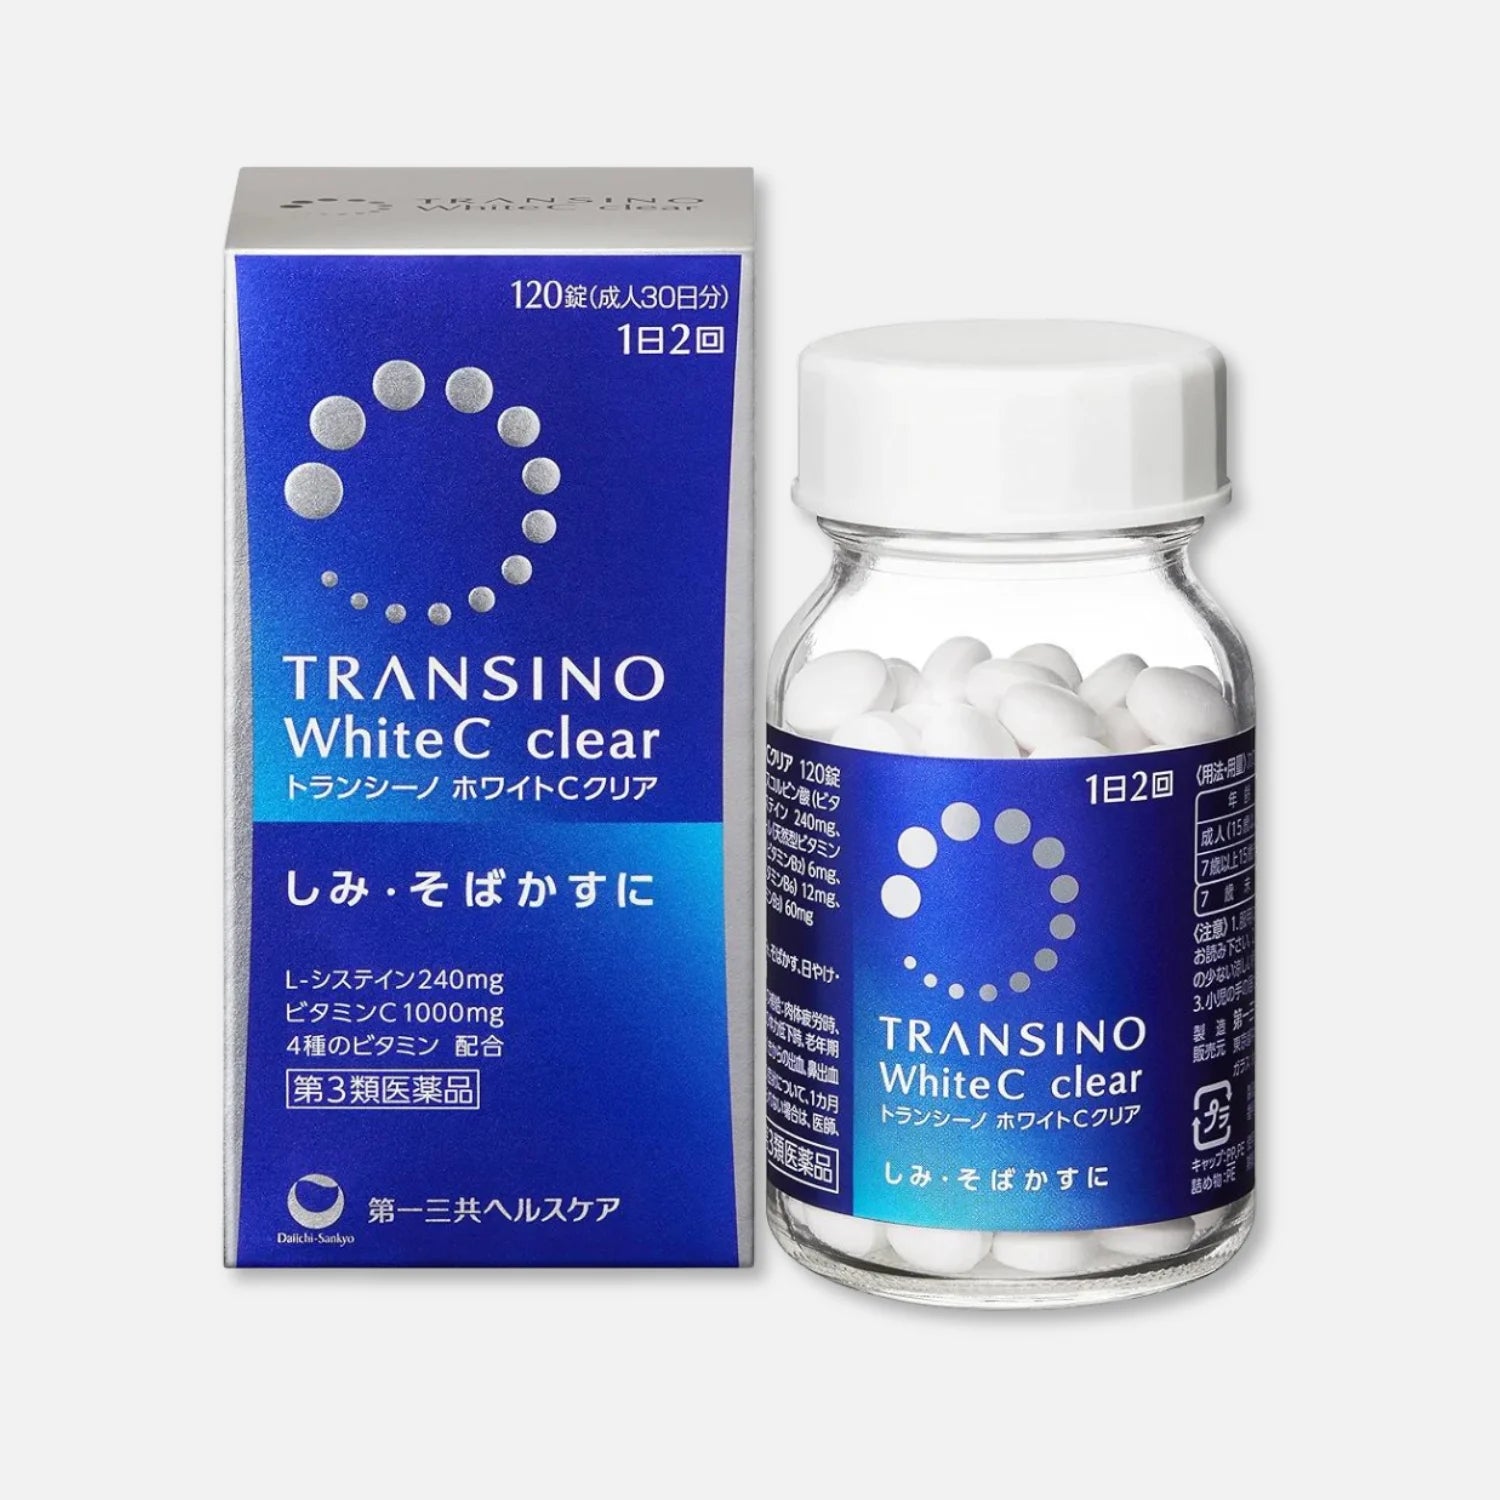 Transino White C Clear Whitening Supplement (60/120/240 Tablets) - Buy Me Japan